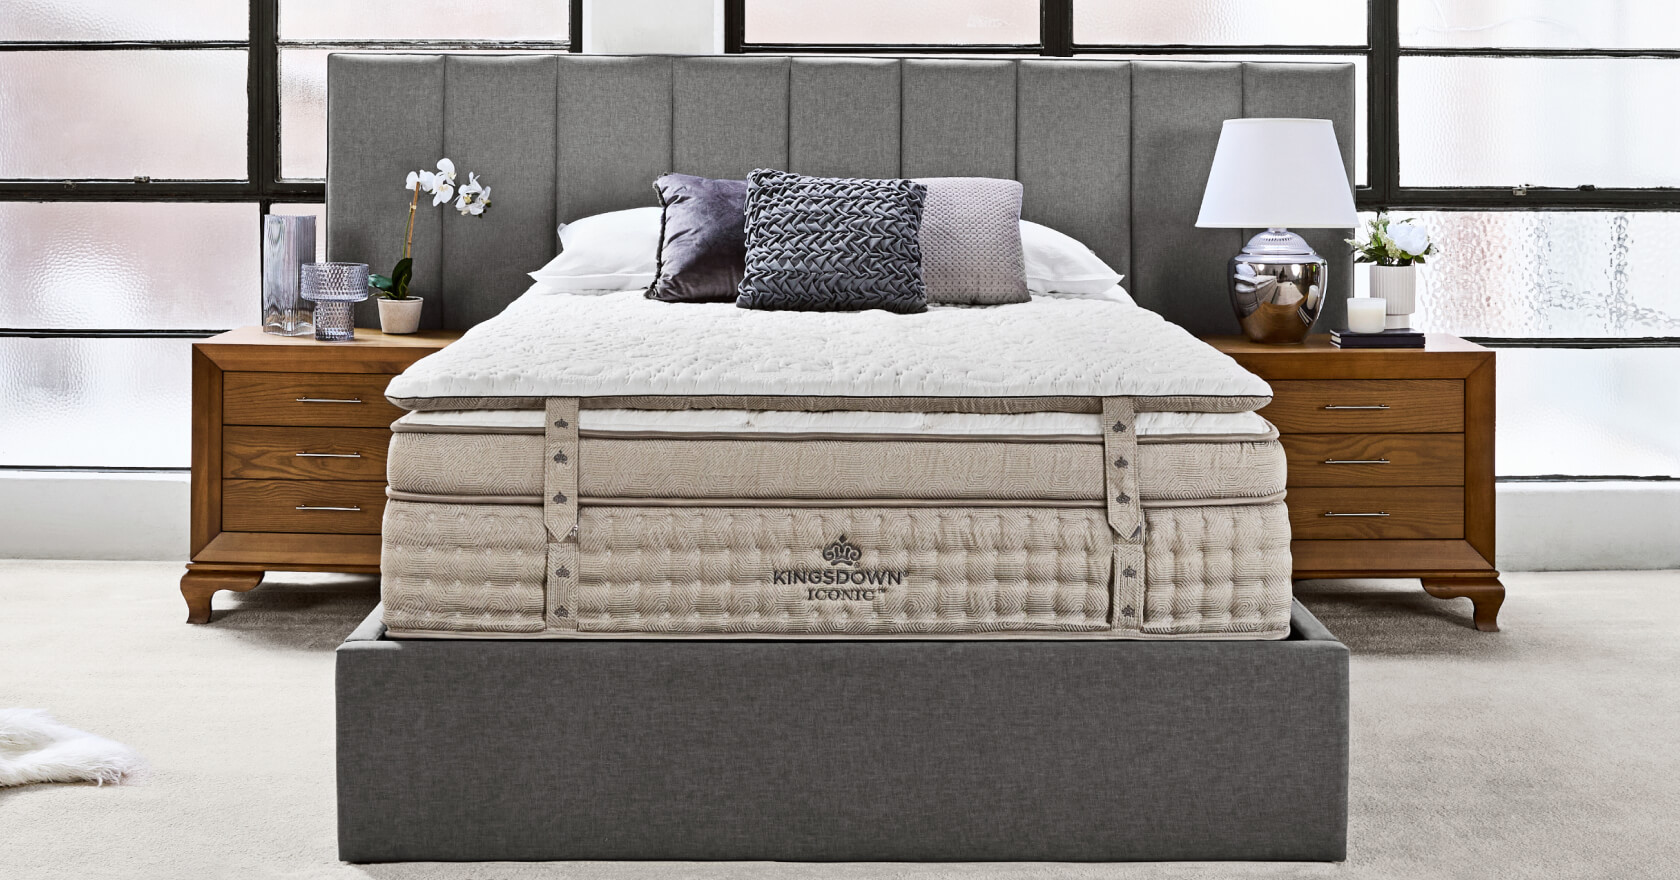 mattresses over $2000